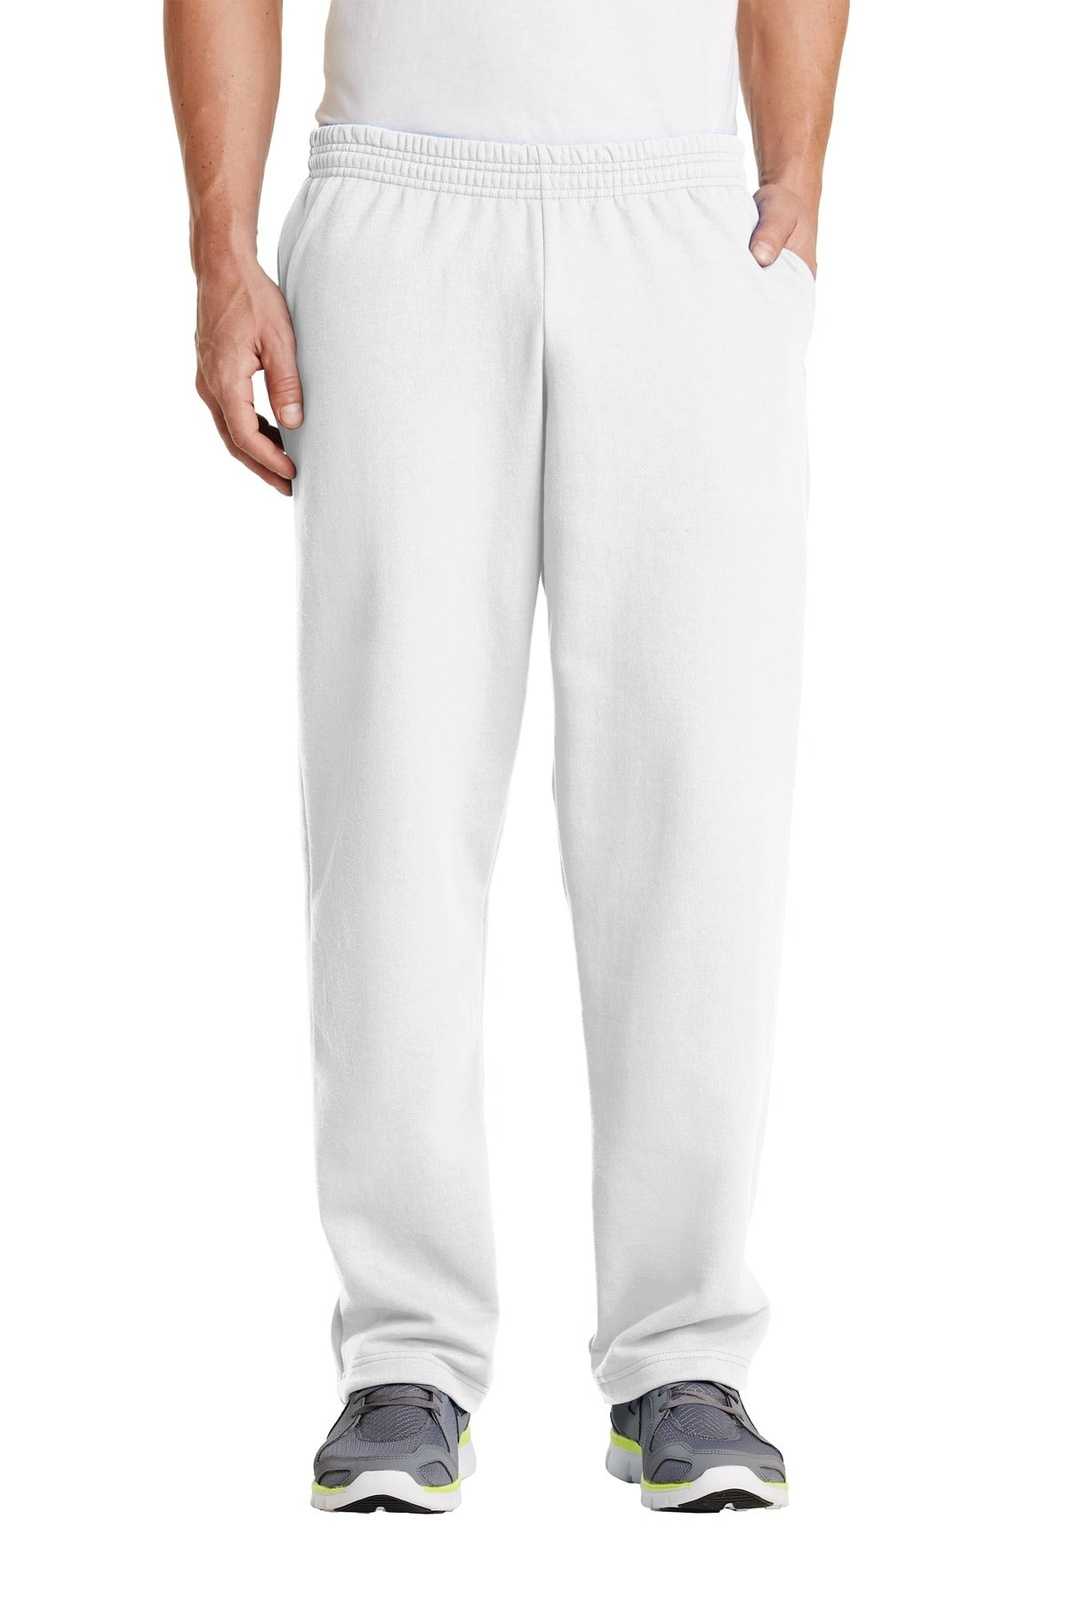 Port &amp; Company PC78P Core Fleece Sweatpant with Pockets - White - HIT a Double - 1